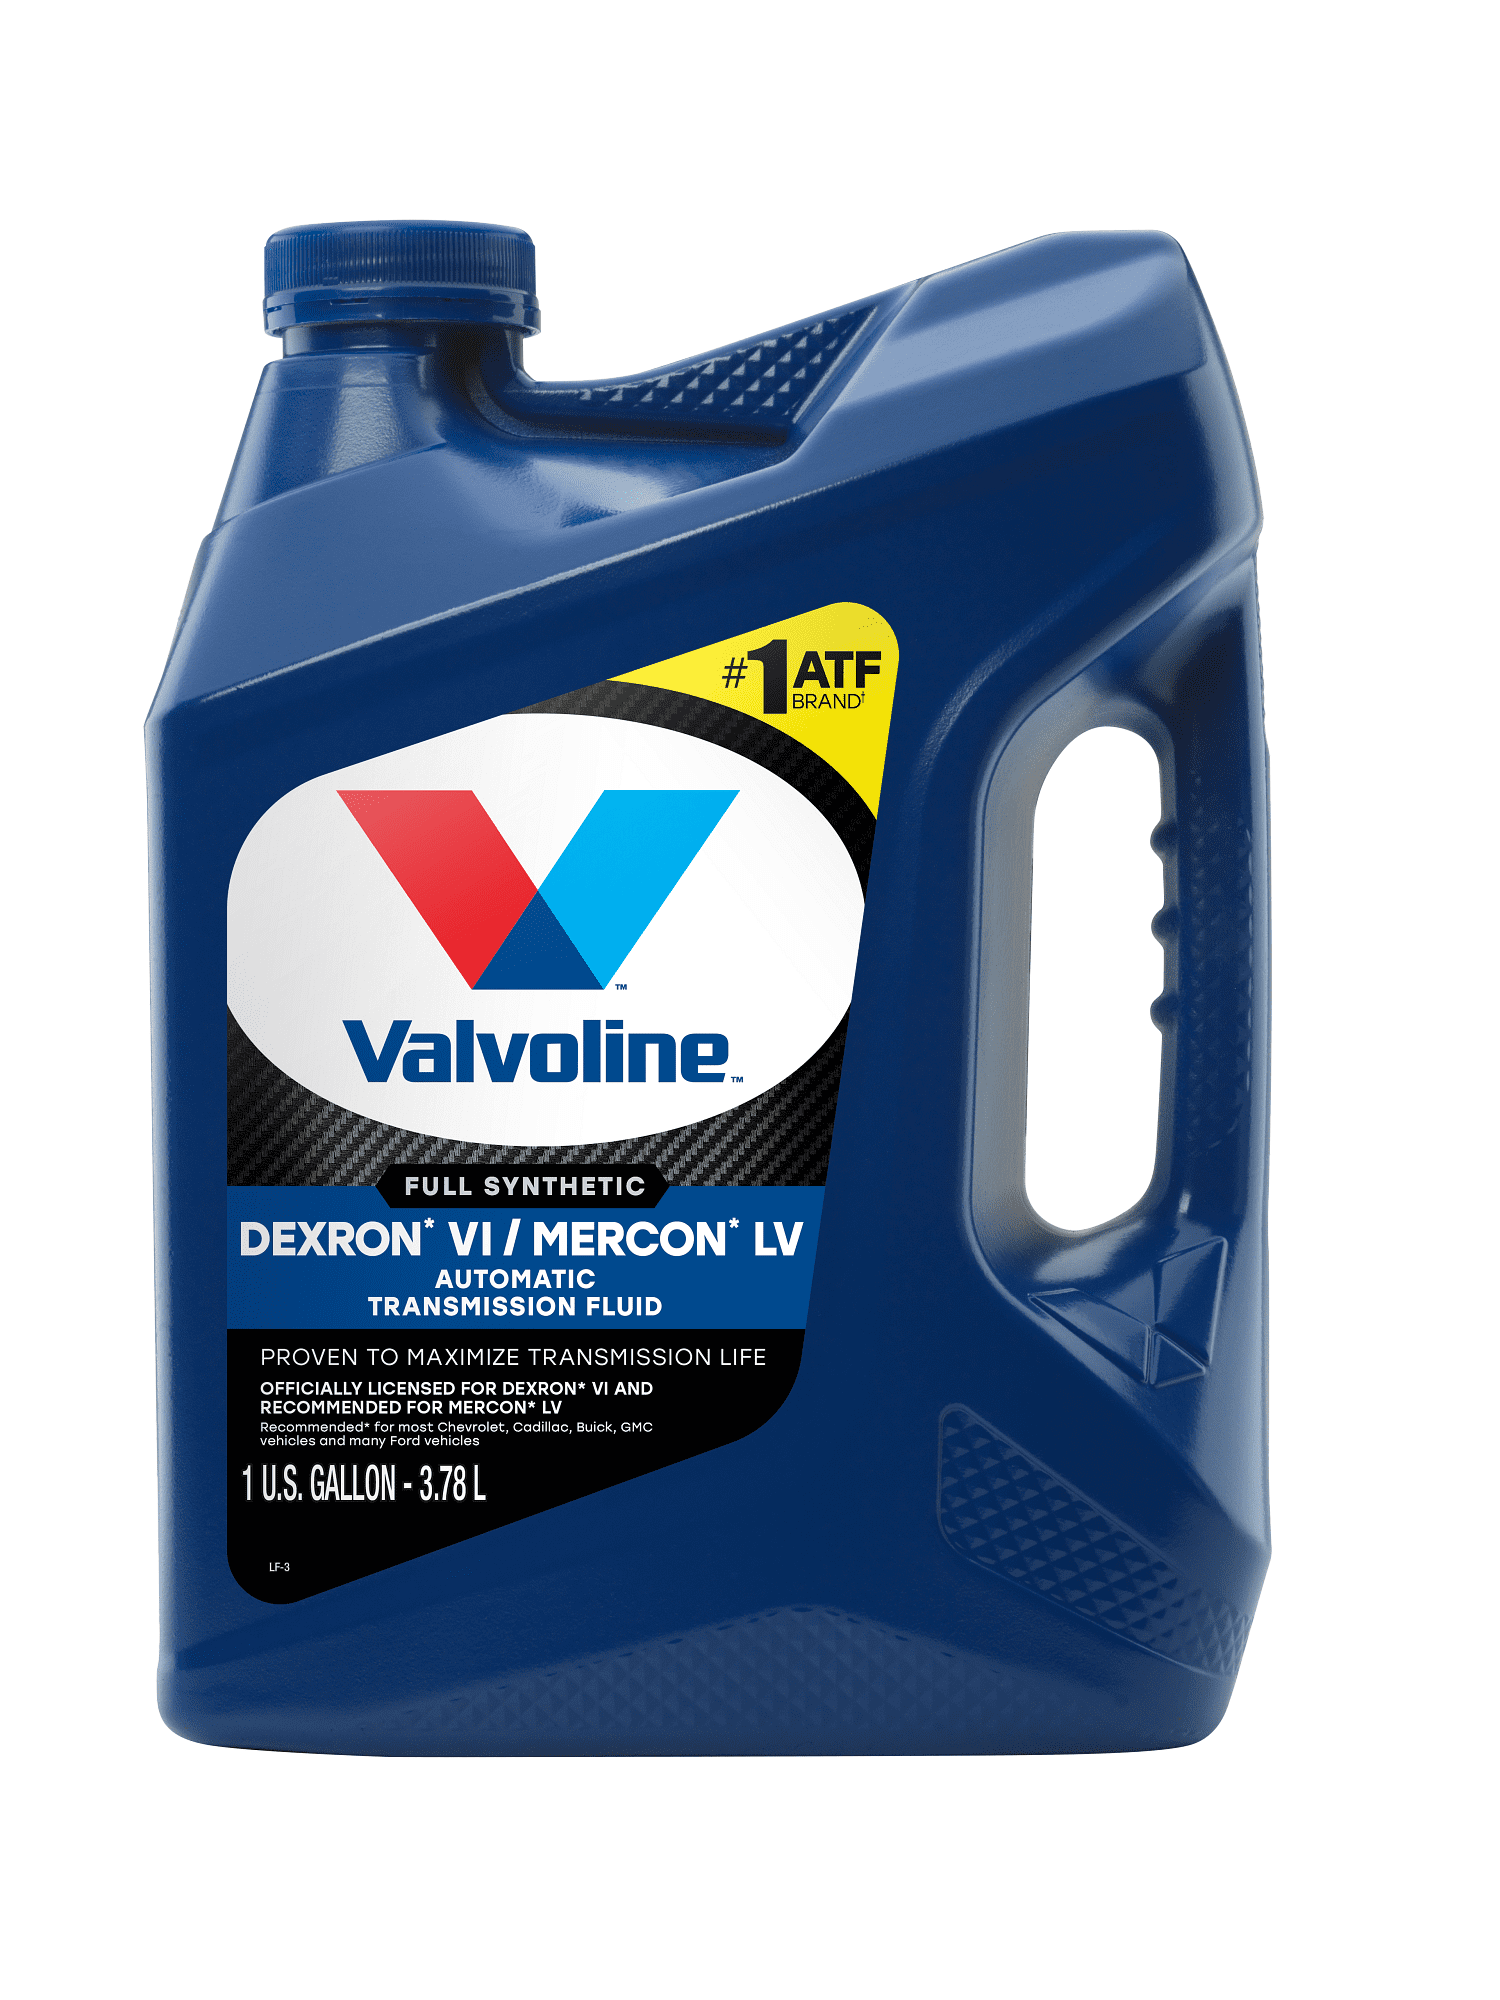 Valvoline ATF Dexron VI/Mercon LV Full Synthetic , 1 Gallon Fits select:  2011-2019 CHEVROLET SILVERADO, 2011-2020 CHEVROLET EQUINOX